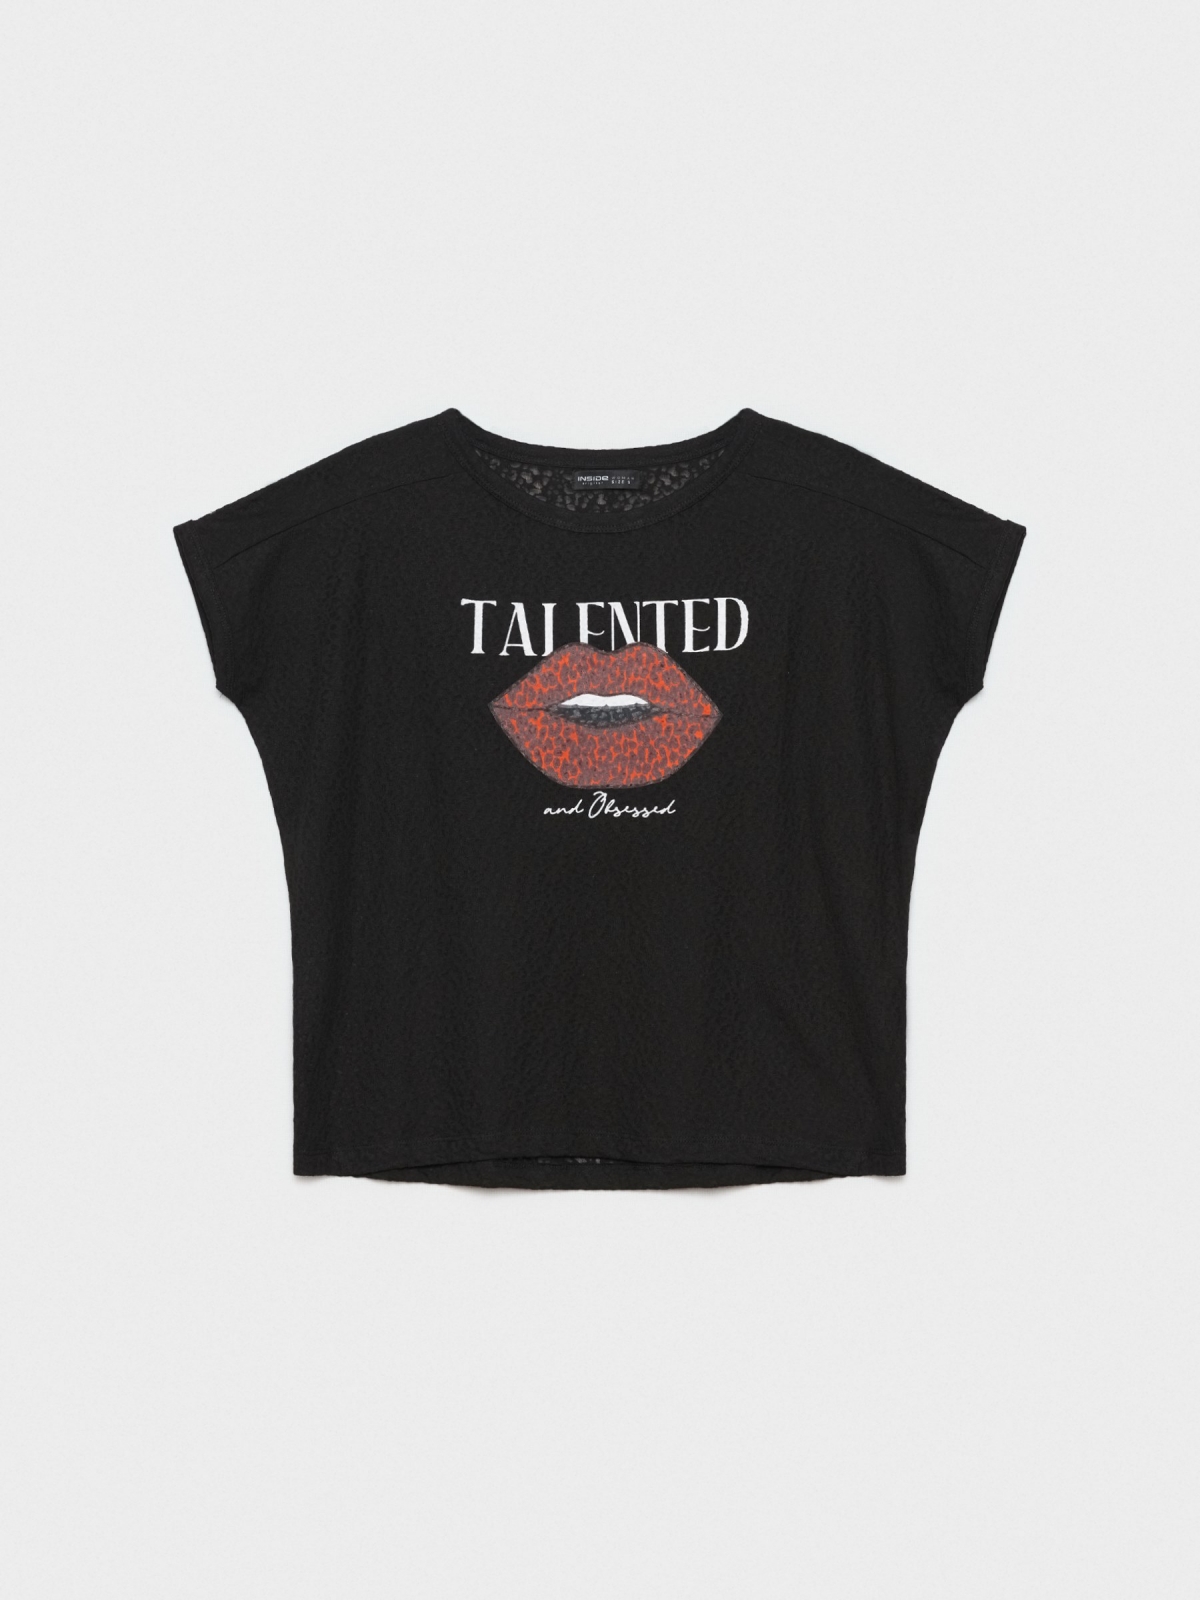  Talented T-shirt black